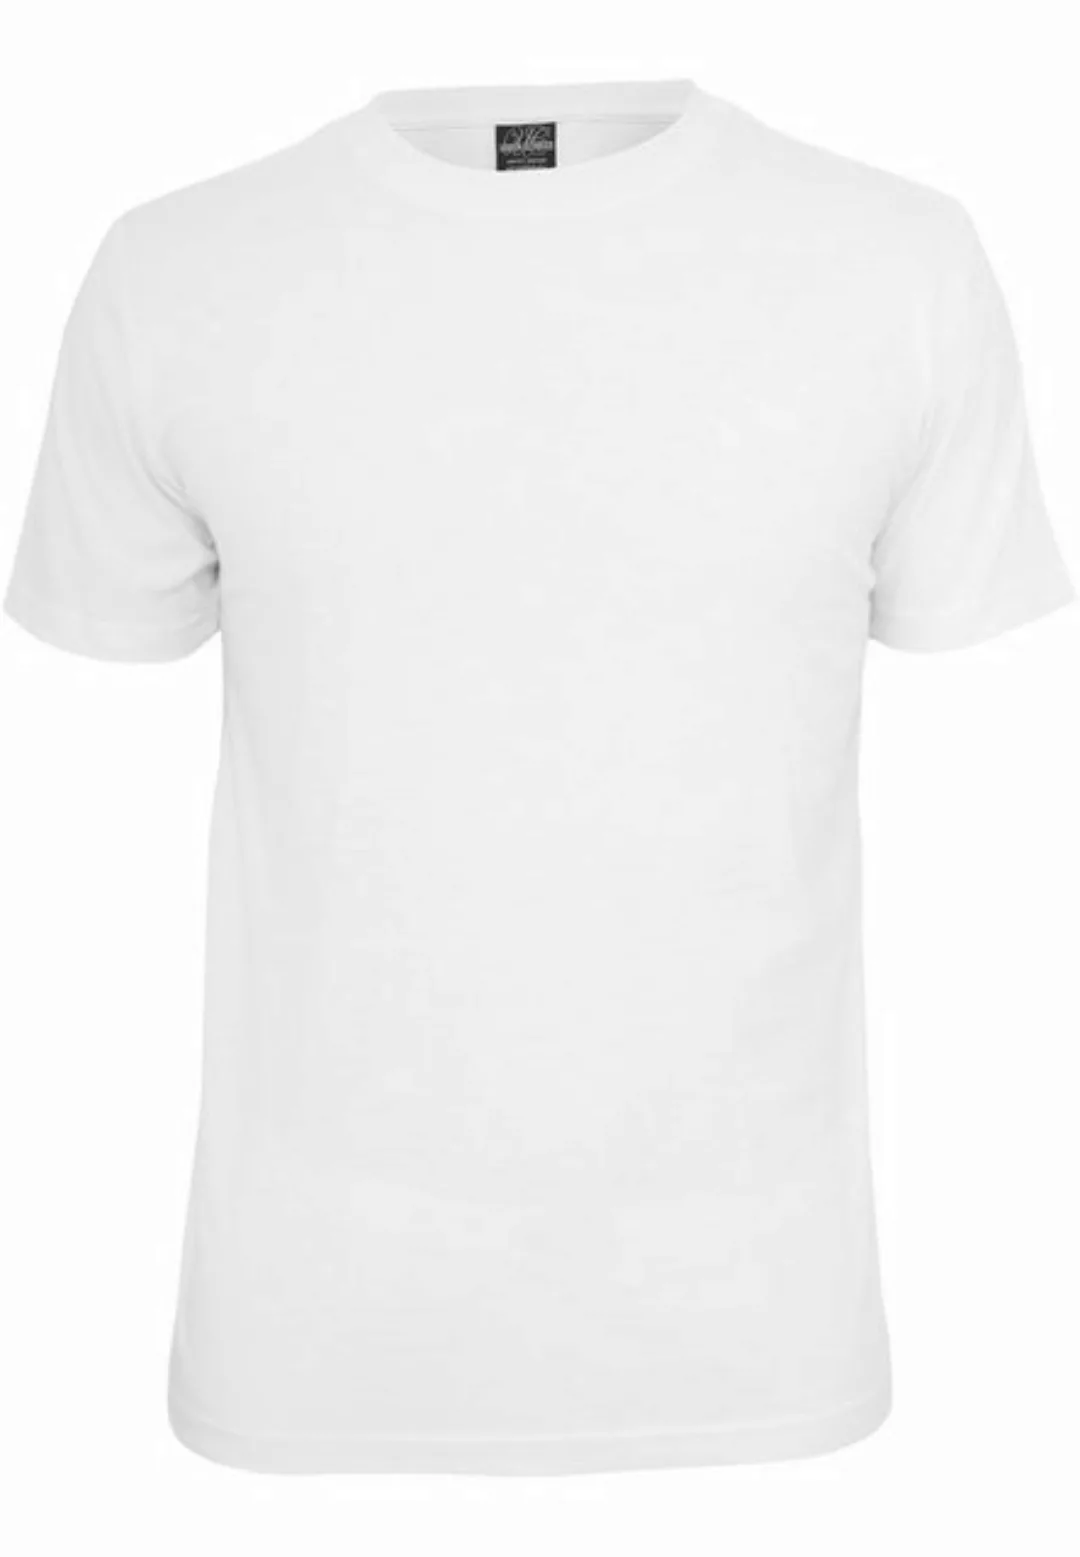 URBAN CLASSICS T-Shirt TB168 - Basic Tee white S günstig online kaufen